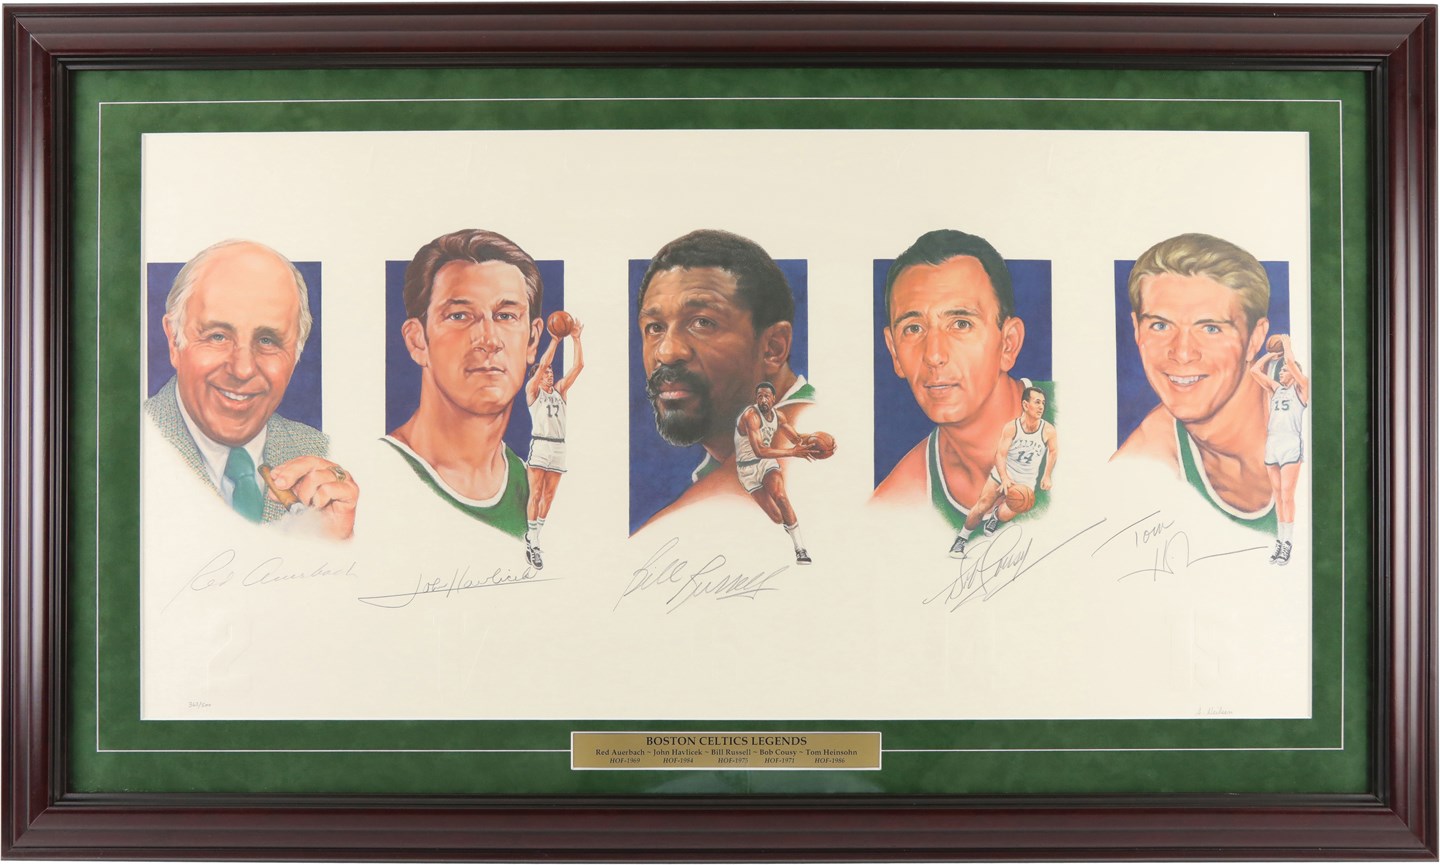 Boston Celtics Legends Signed Limited-Edition Lithograph (363/500)